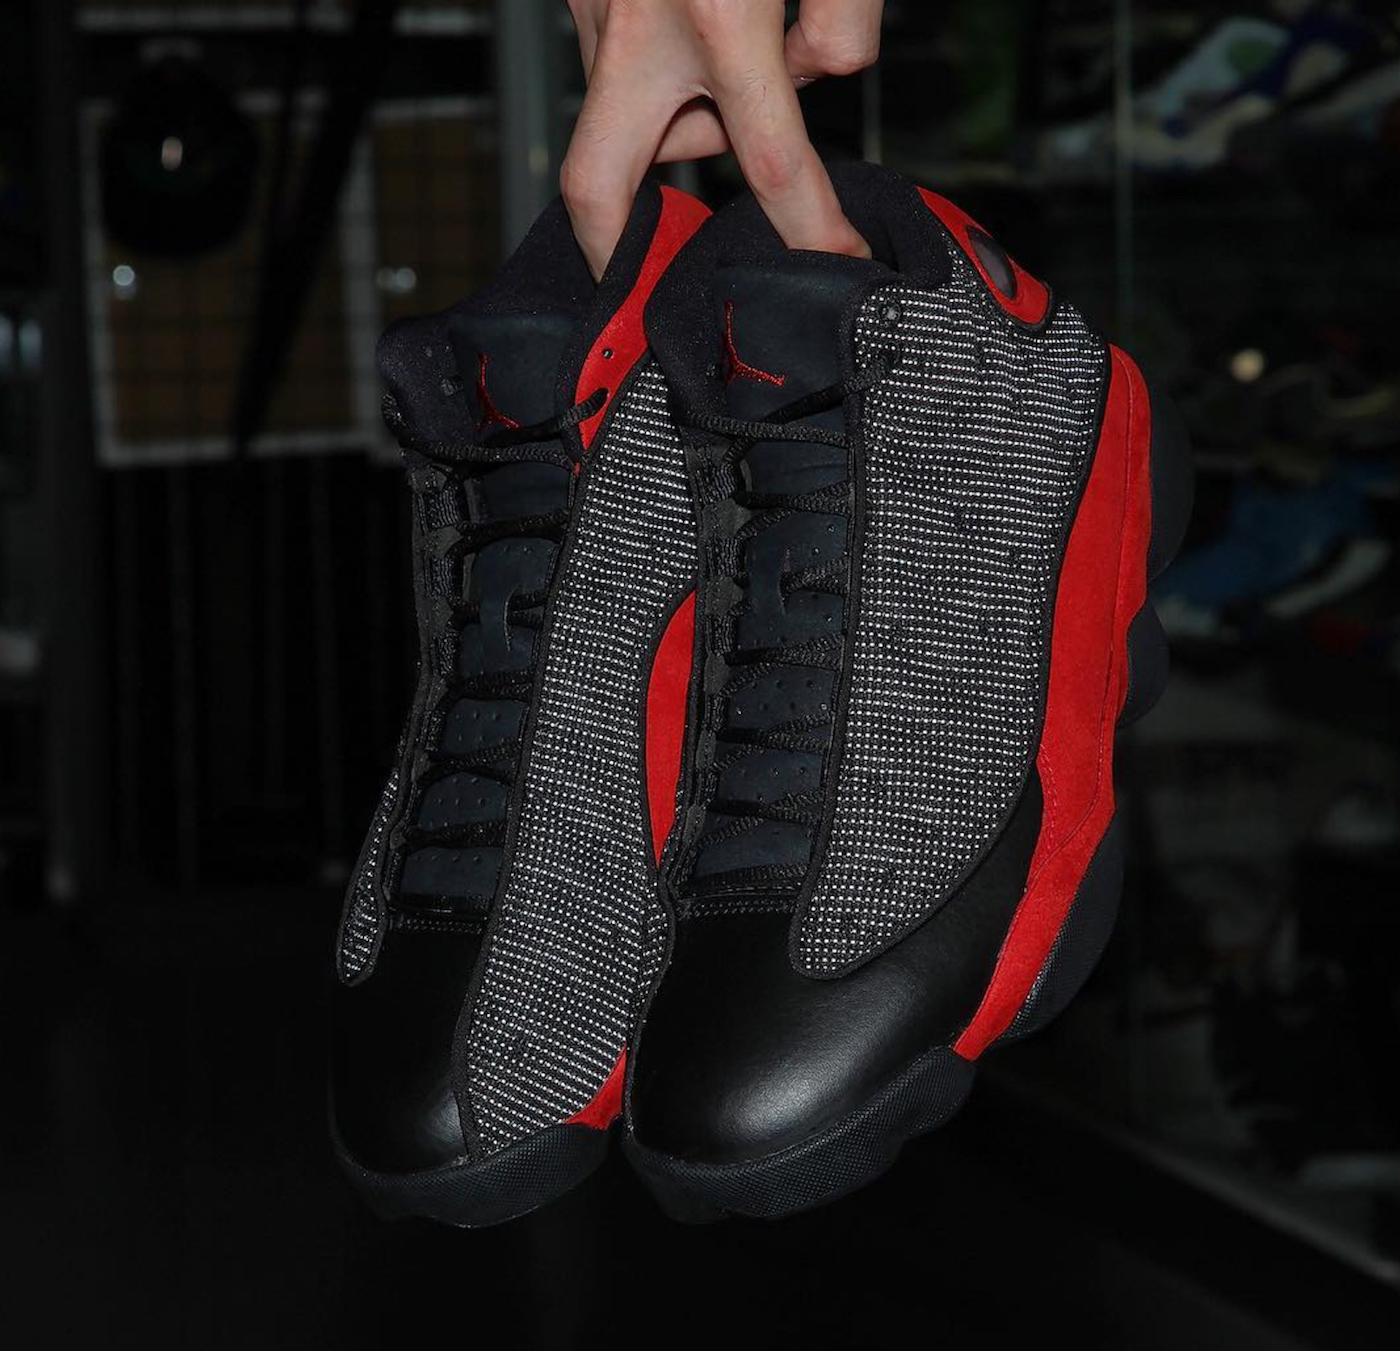 Air Jordan 13 Low Black/Red - Another Look - WearTesters